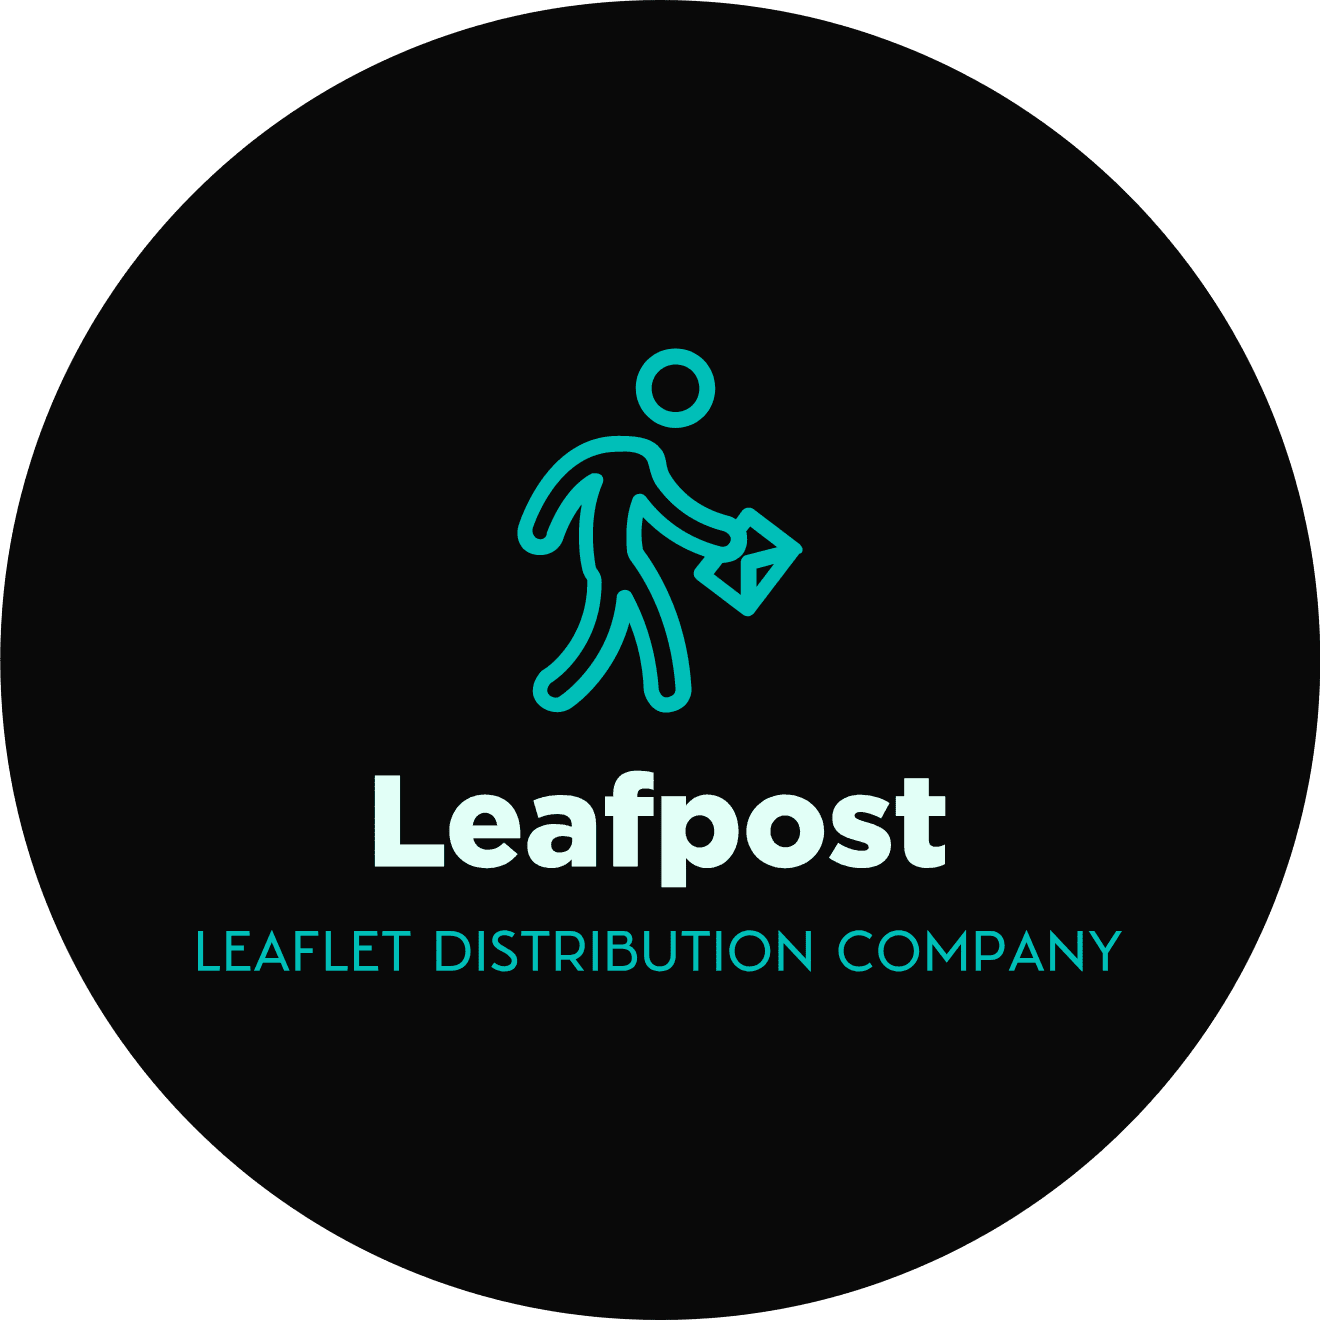 Leafpost